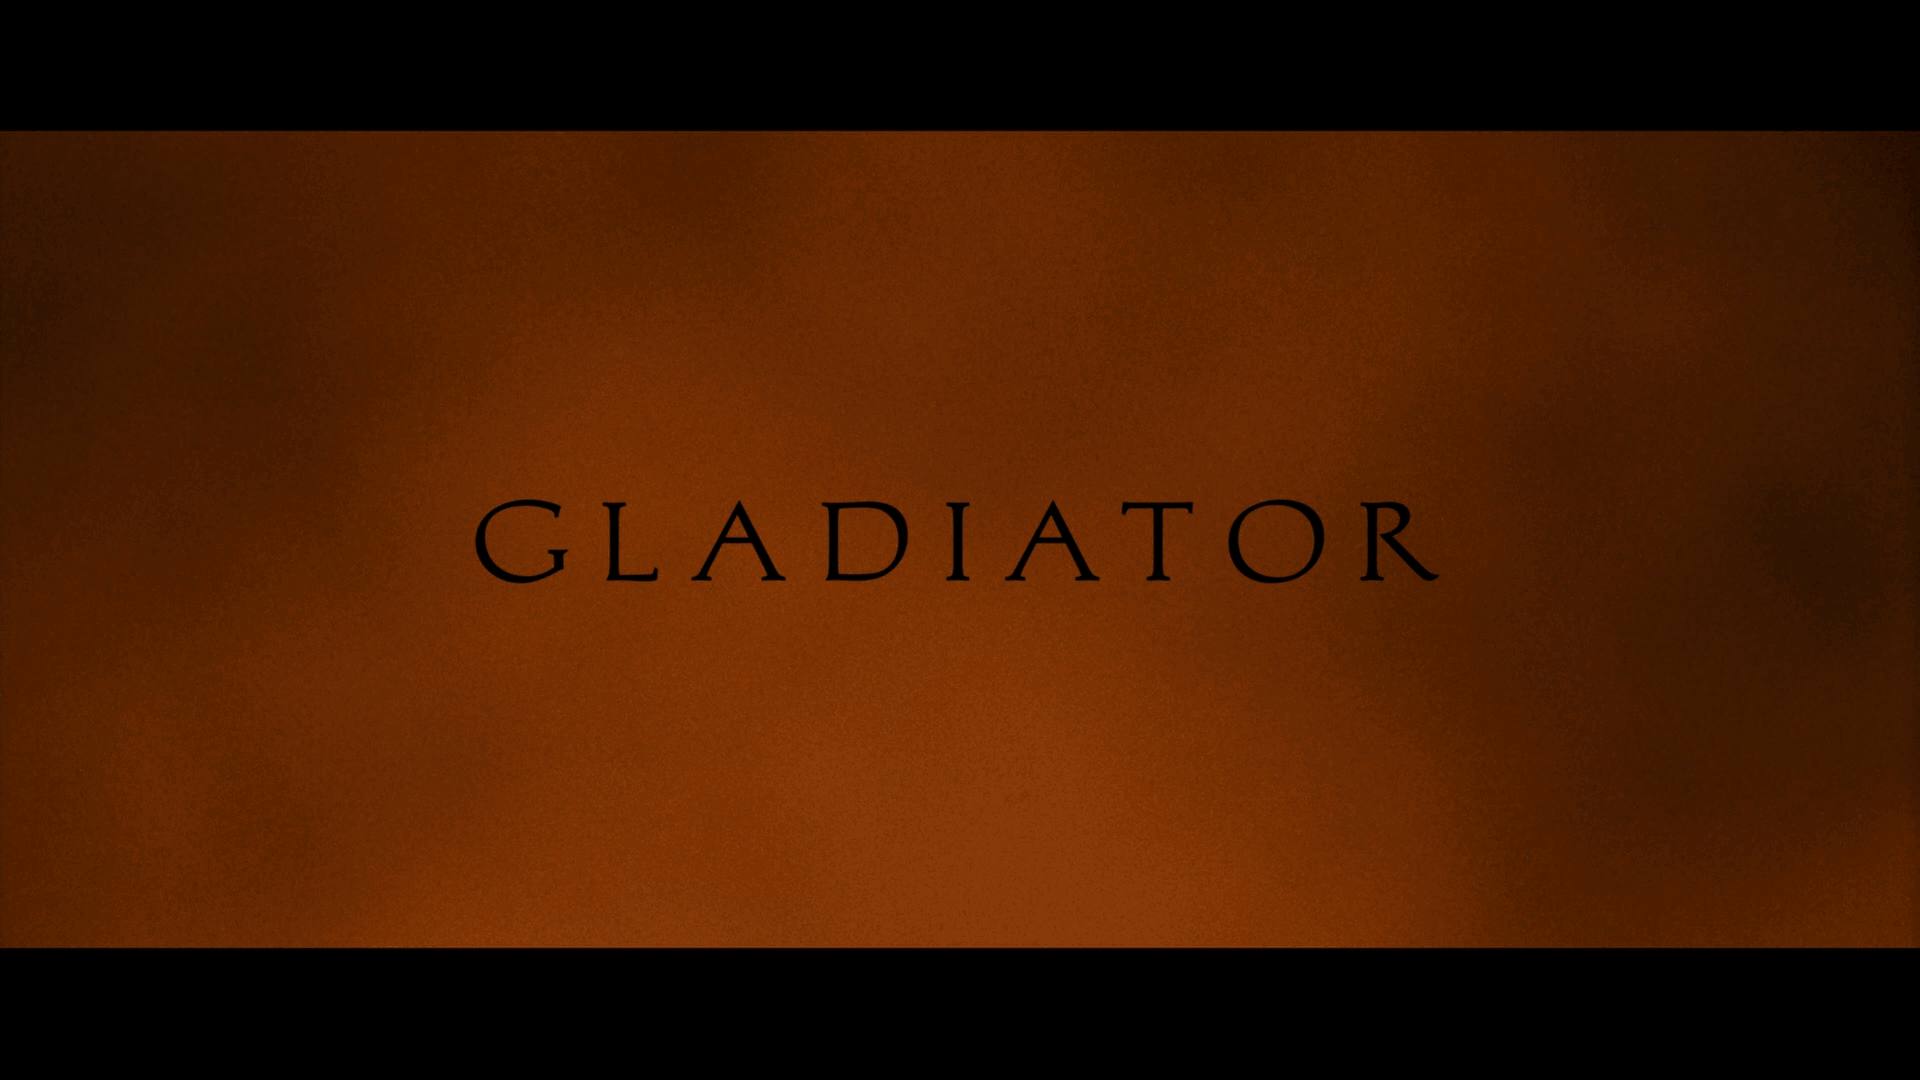 gladiator 4K UHD title